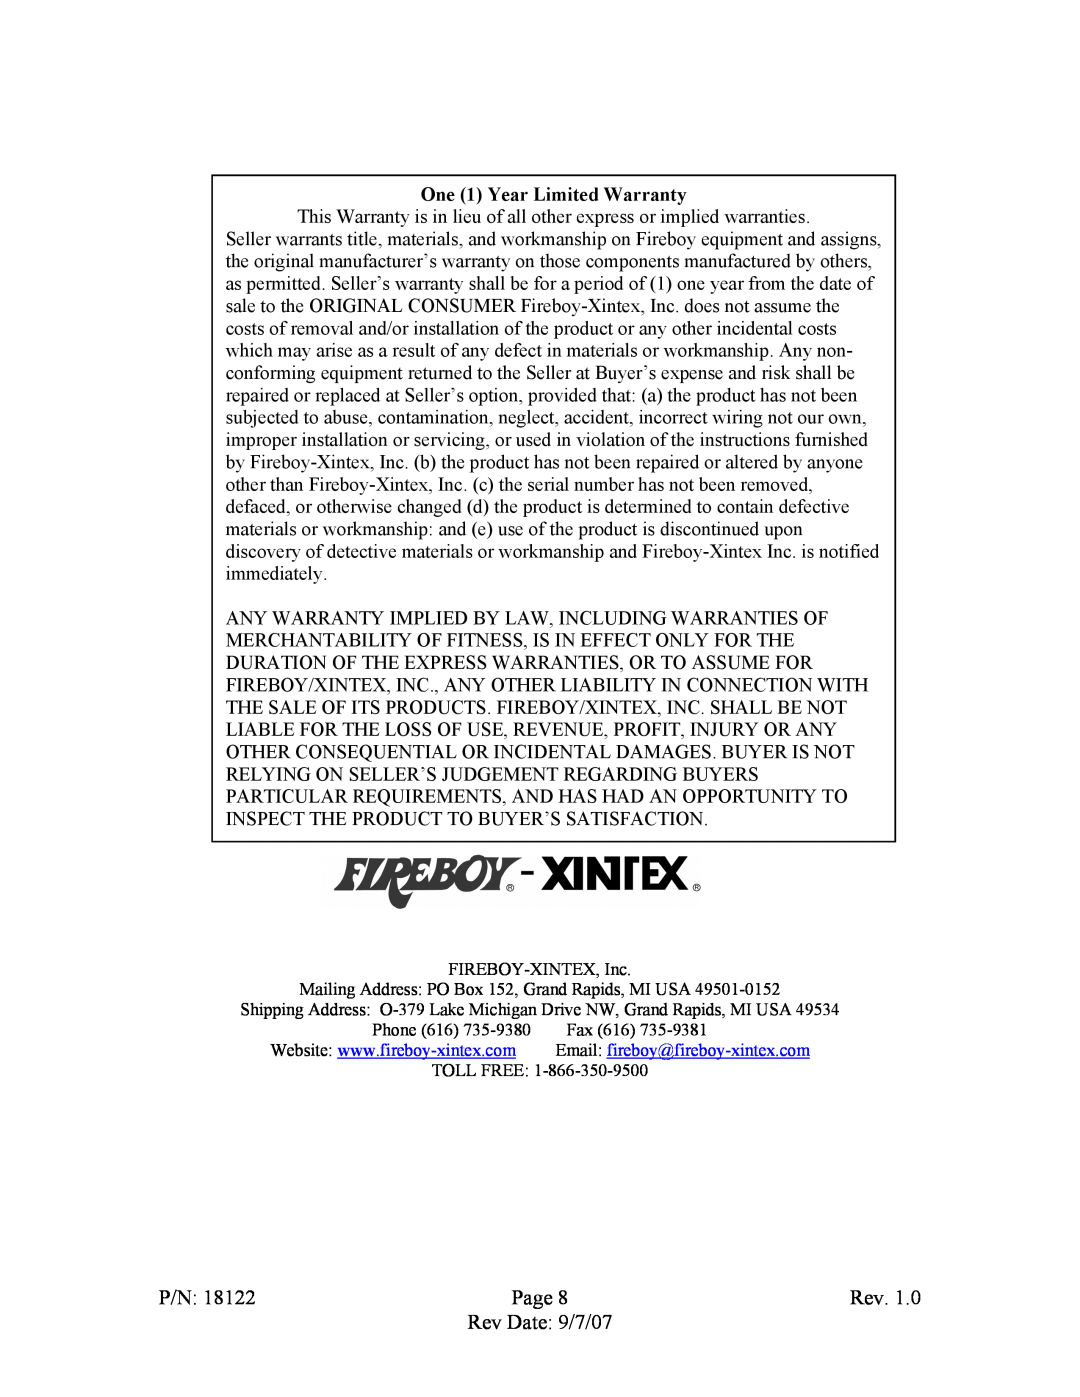 Fireboy- Xintex, LTD S-2A operation manual One 1 Year Limited Warranty, P/N, Page, Rev Date 9/7/07 